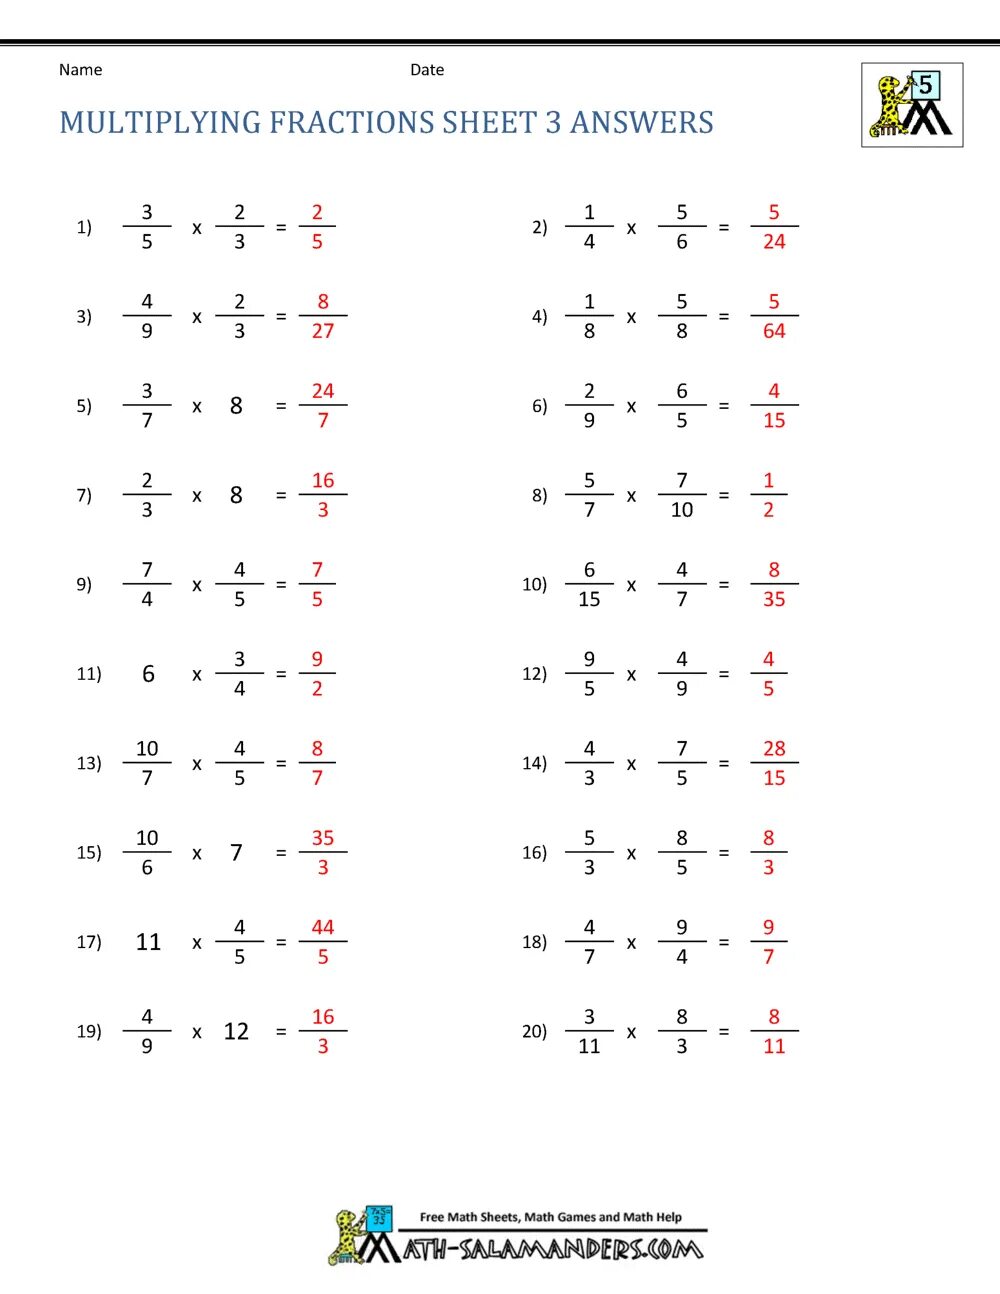 Should multiply. Multiplying fractions. Fraction Multiplication Worksheet. Multiplication of fractions. Multipliers fractions.